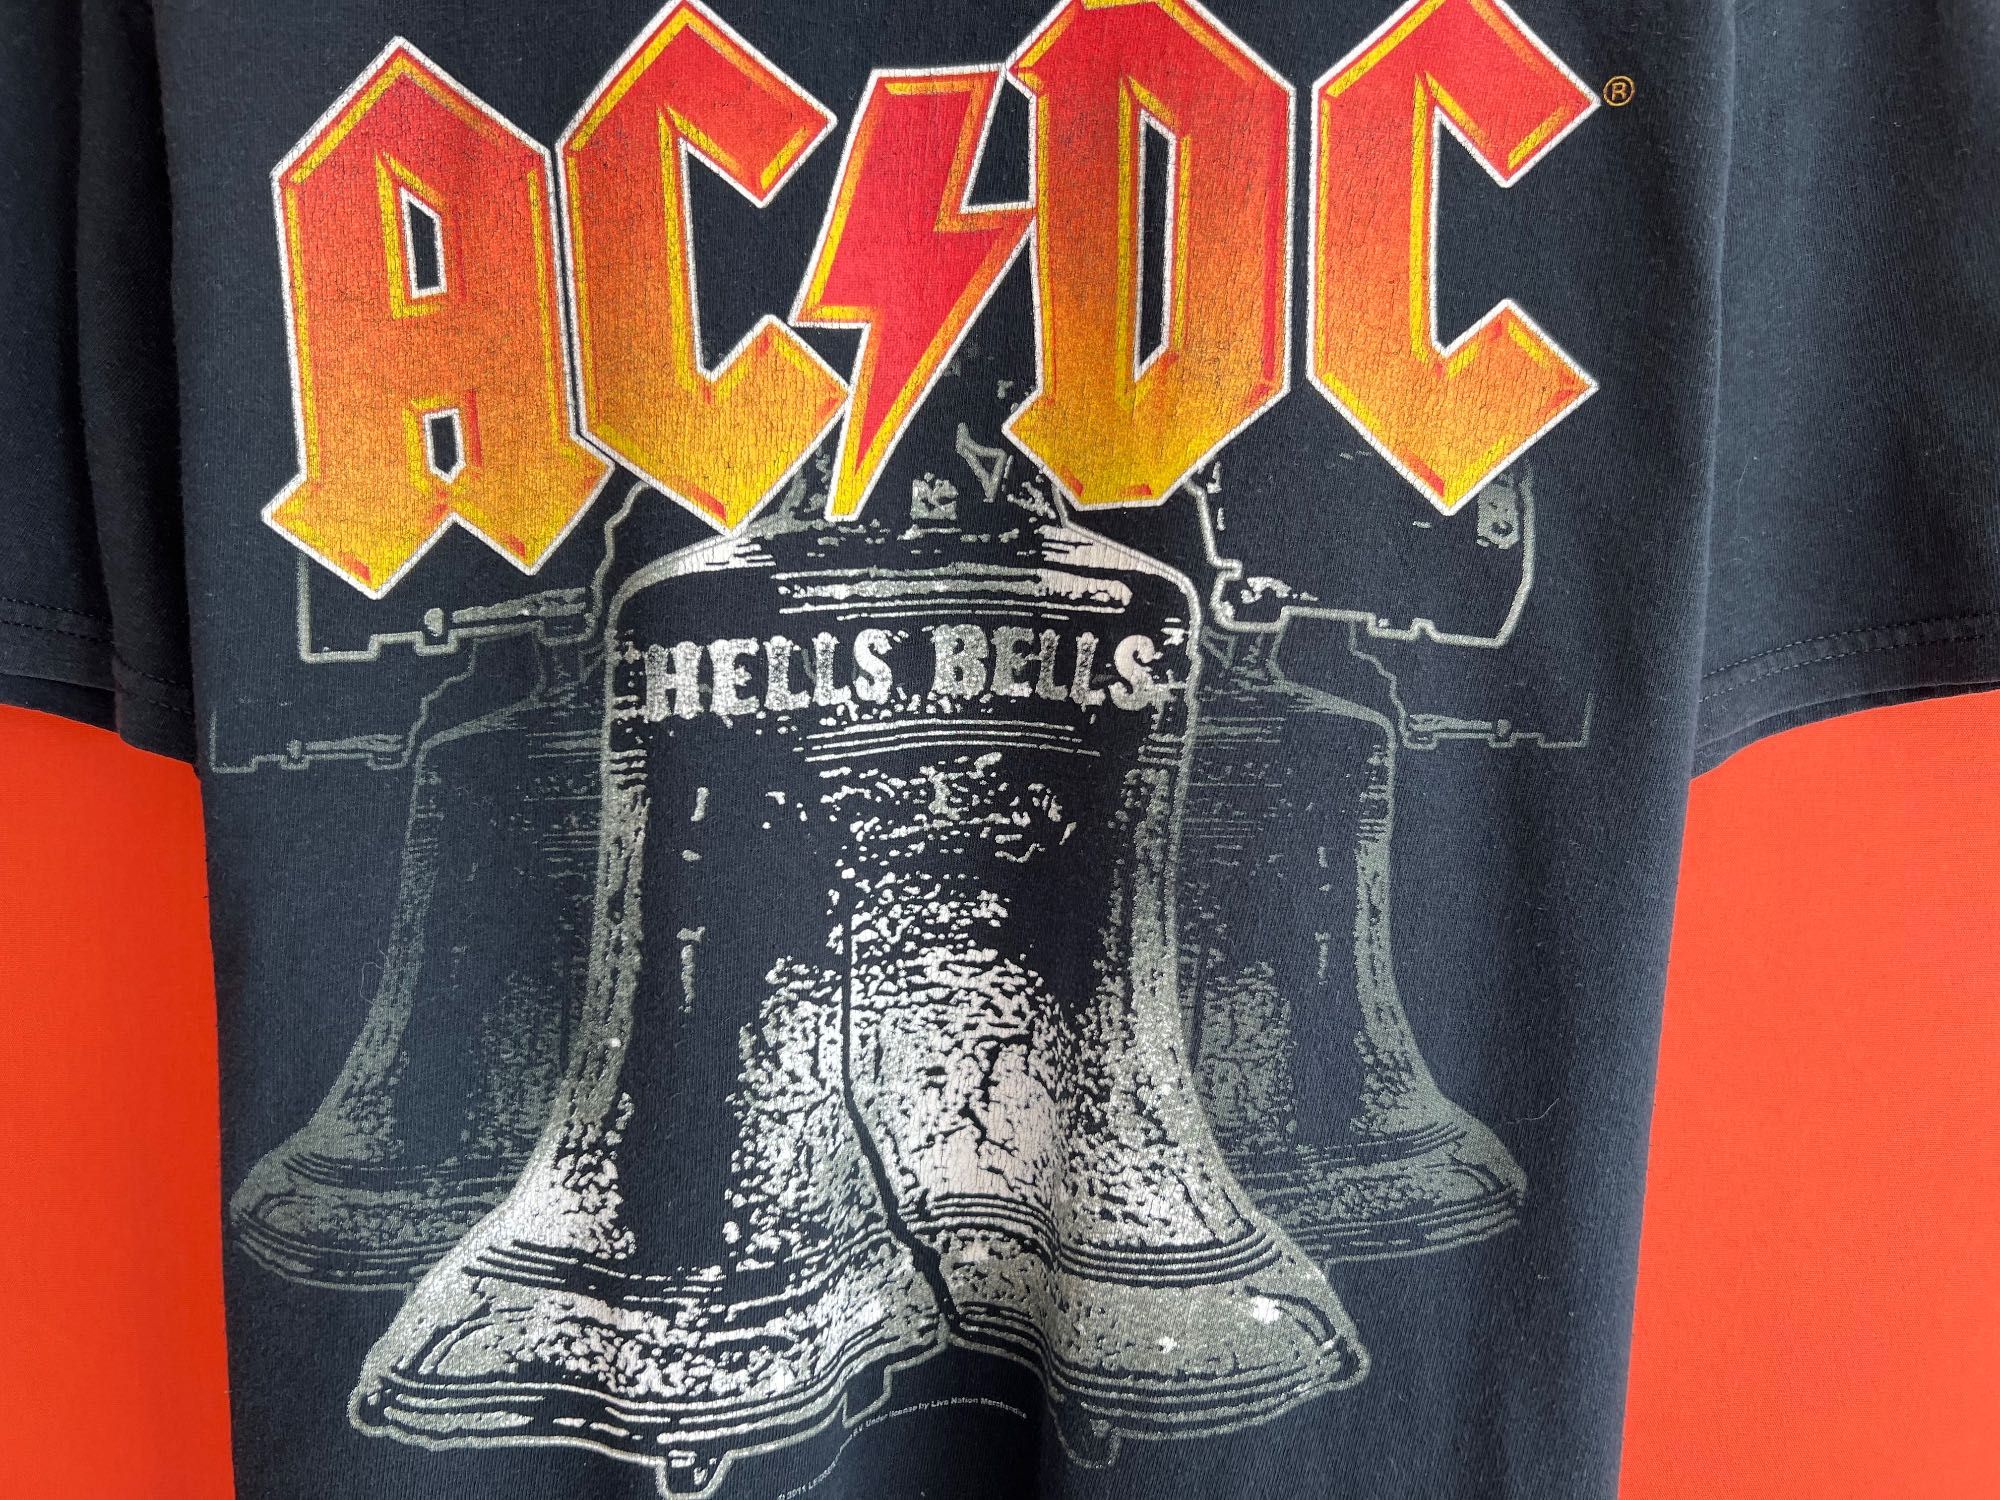 AC/DC 2011 Vintage Merch мужская футболка мерч размер L XL Б У